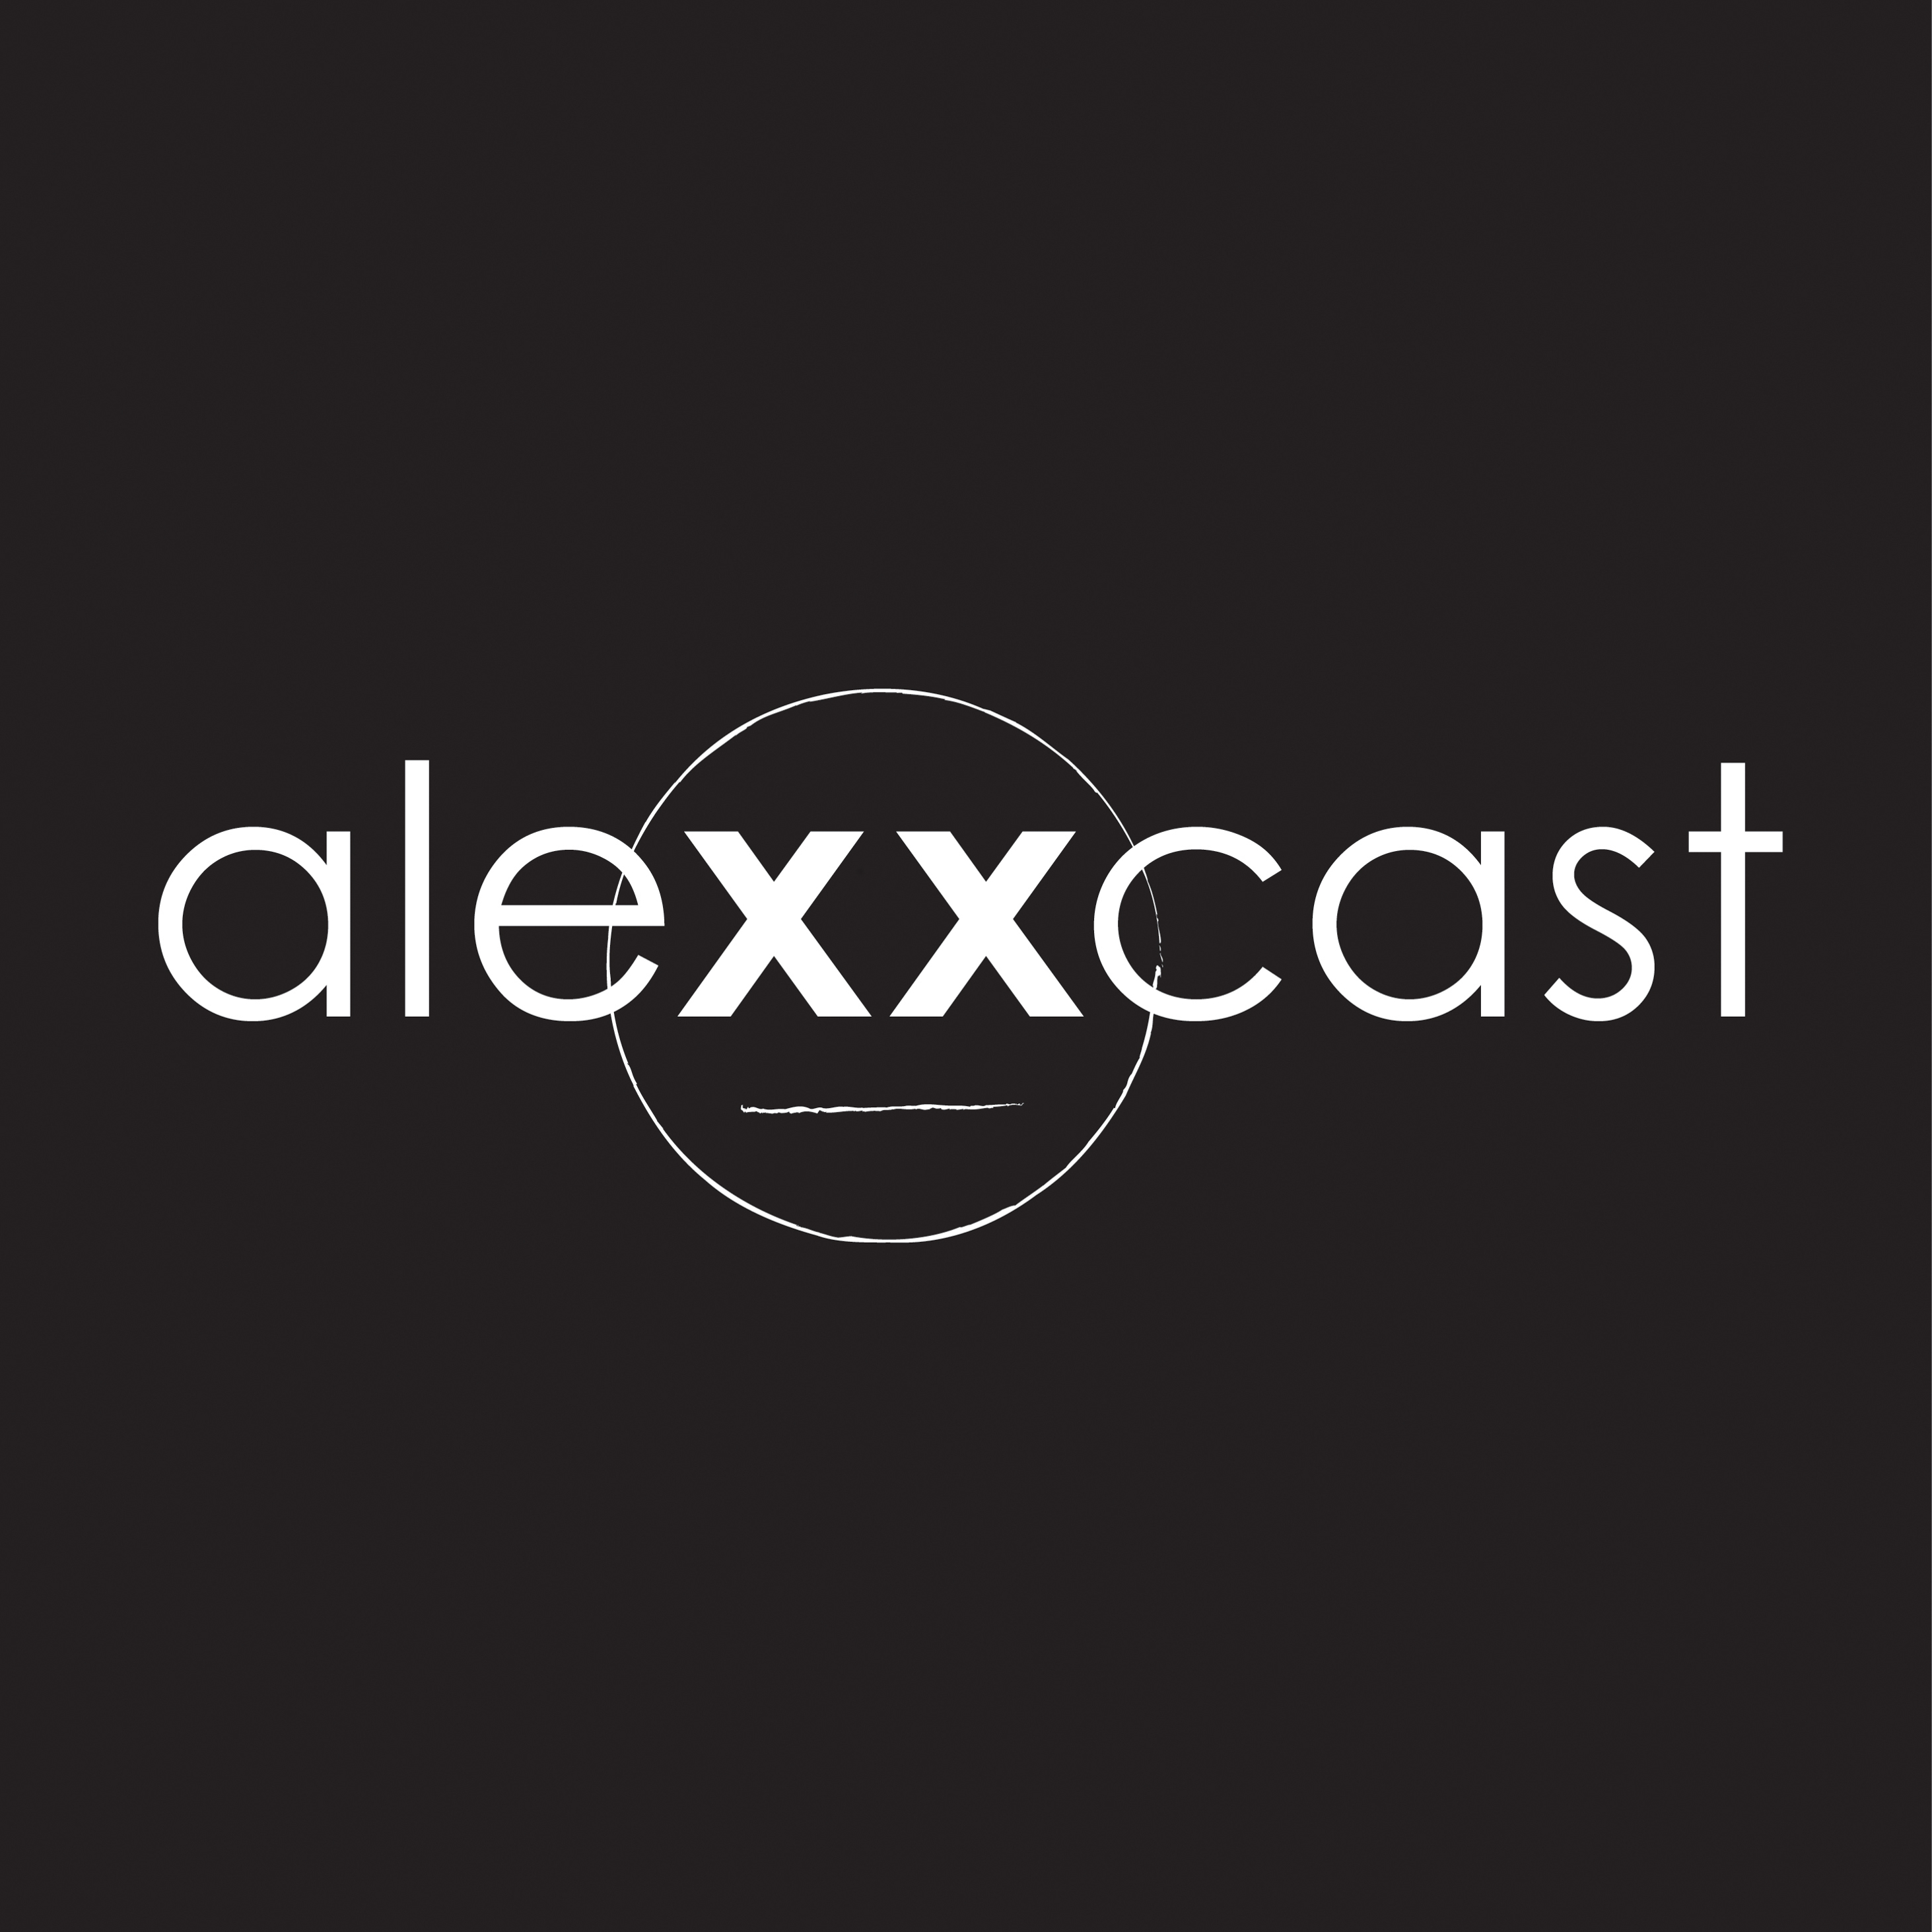 The Alexxcast